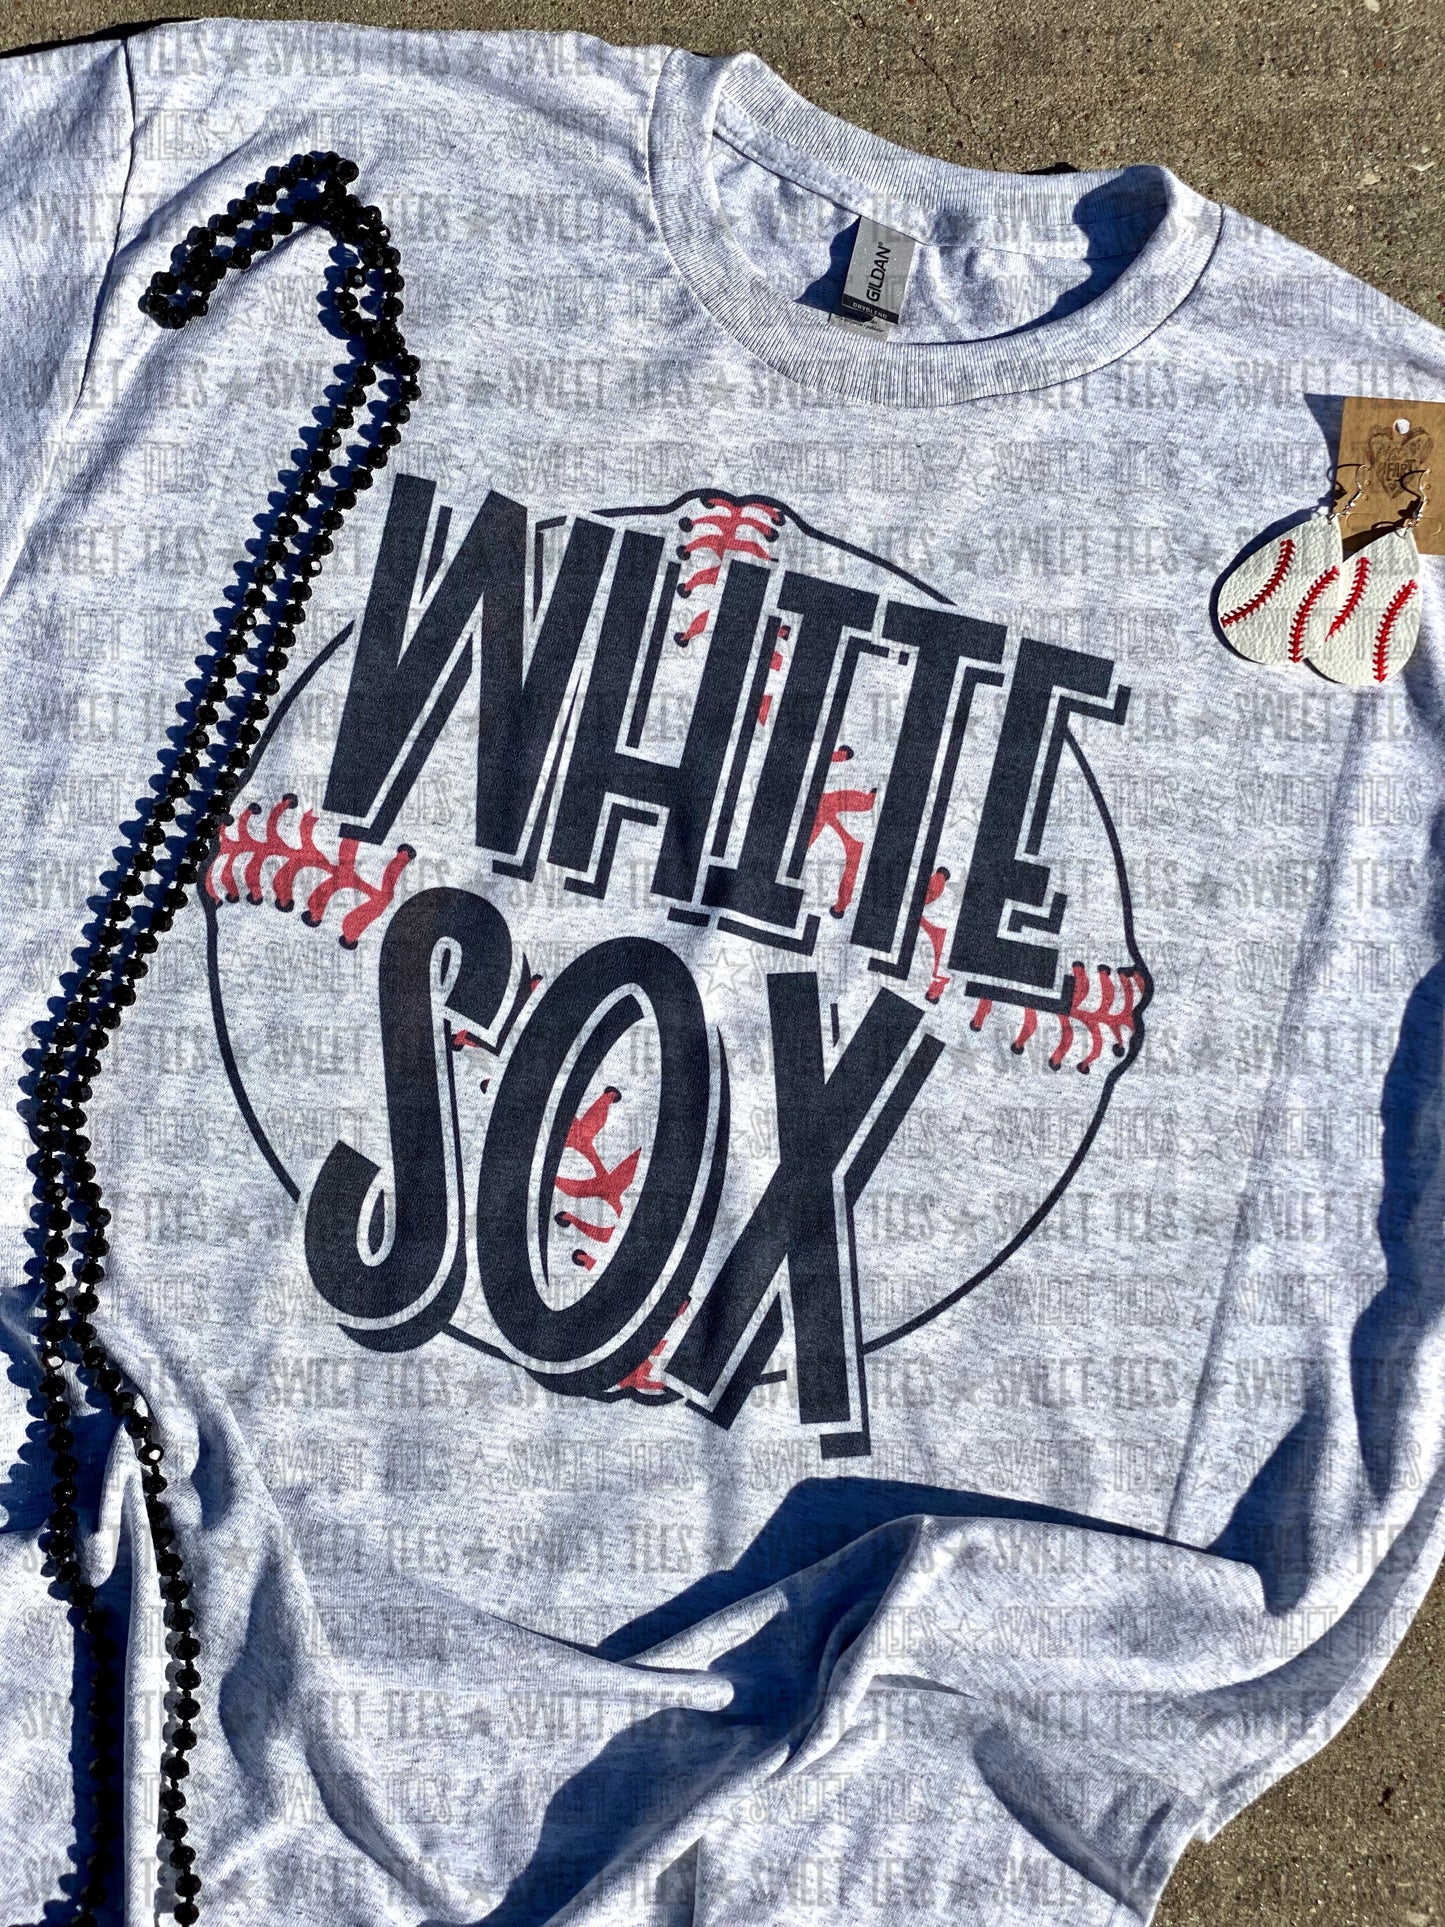 White Sox tee